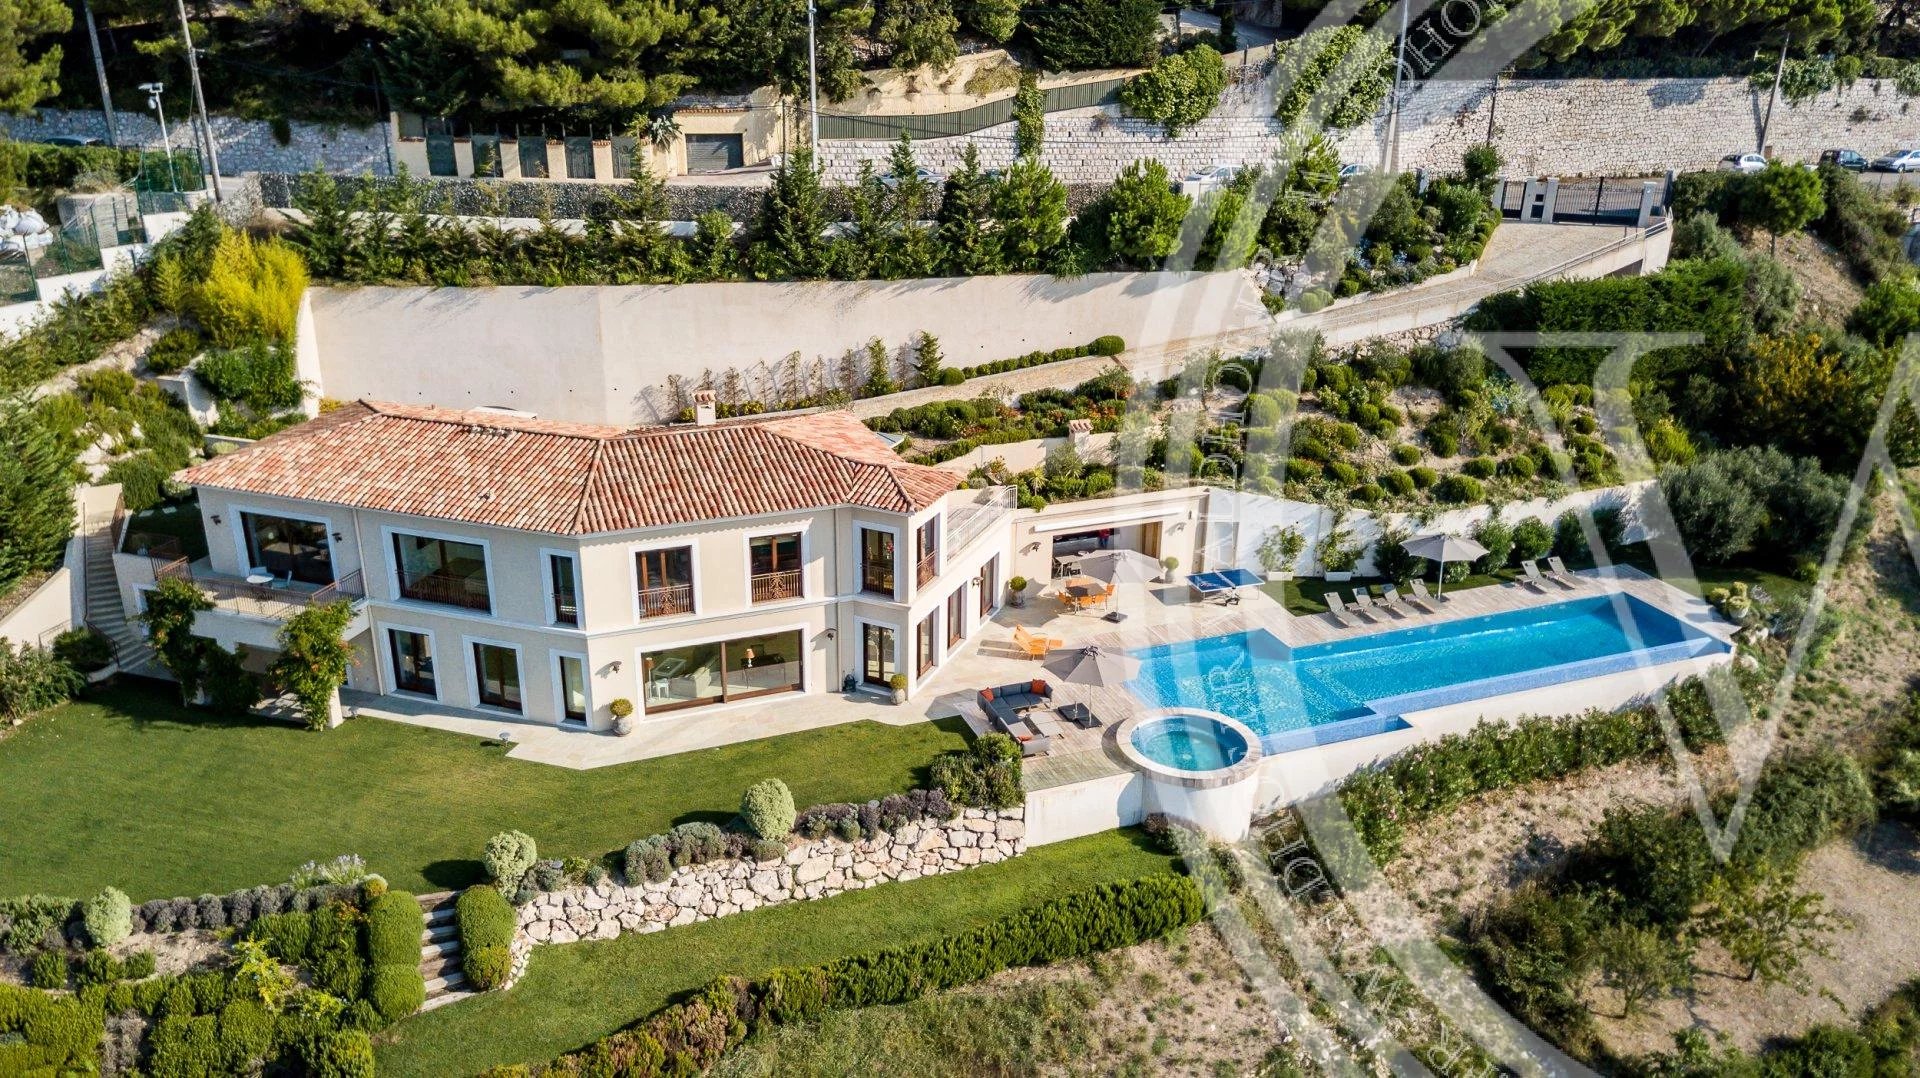 8 bedroom villa with panoramic sea view – EZE